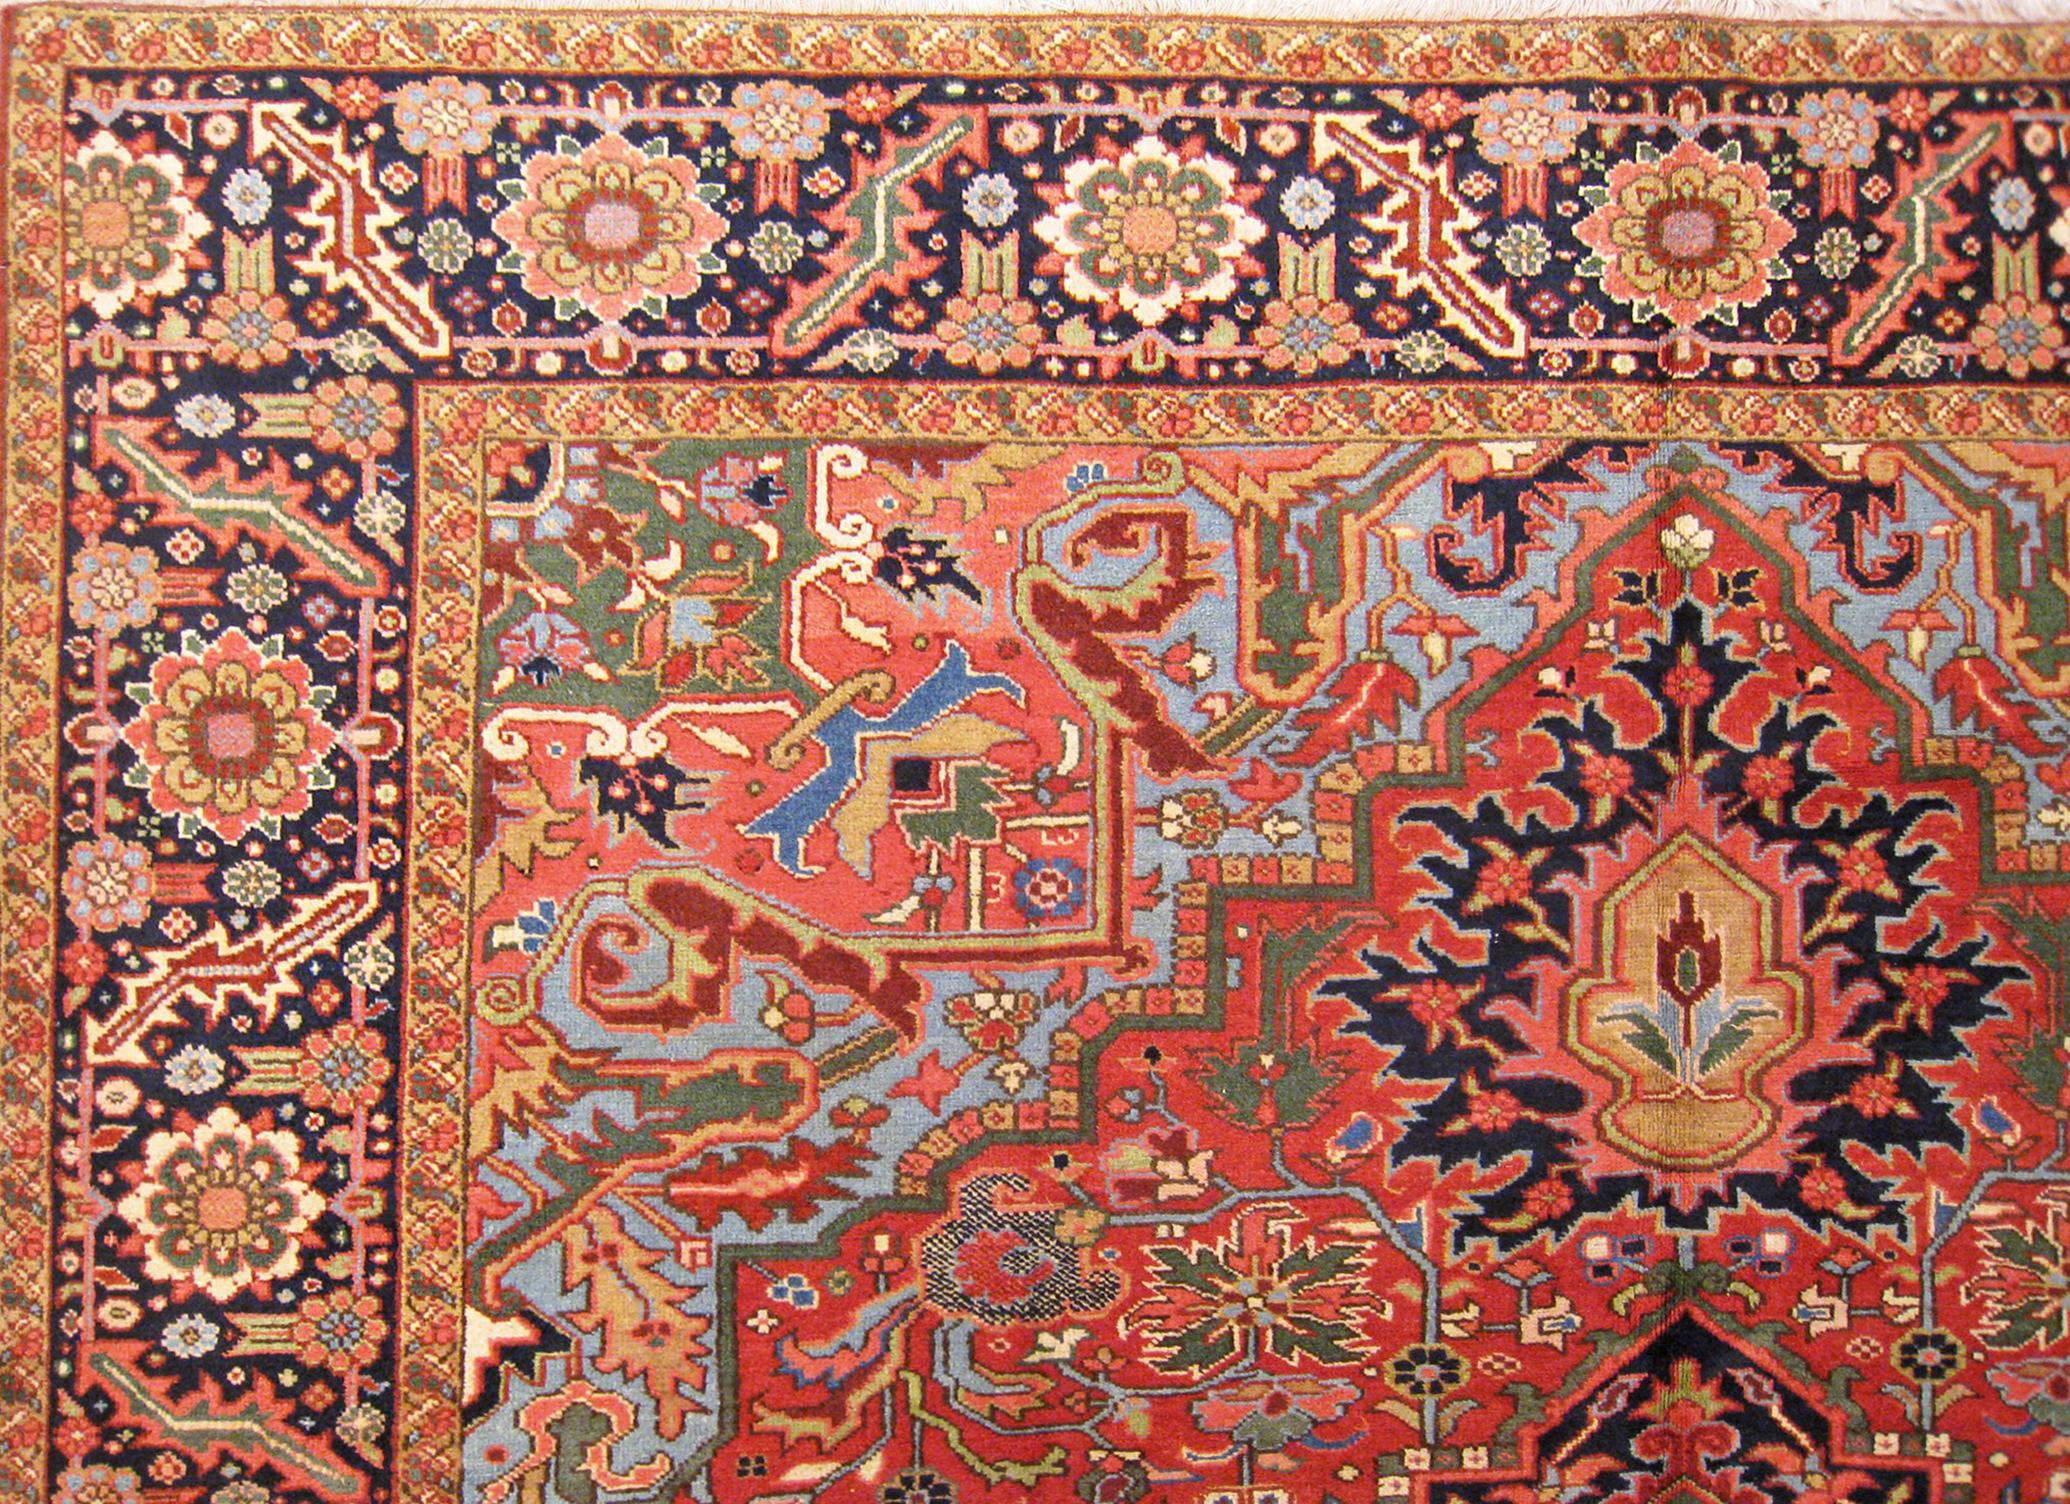 Vintage Persian Decorative Orienta Herizl Rug in Room Size 3